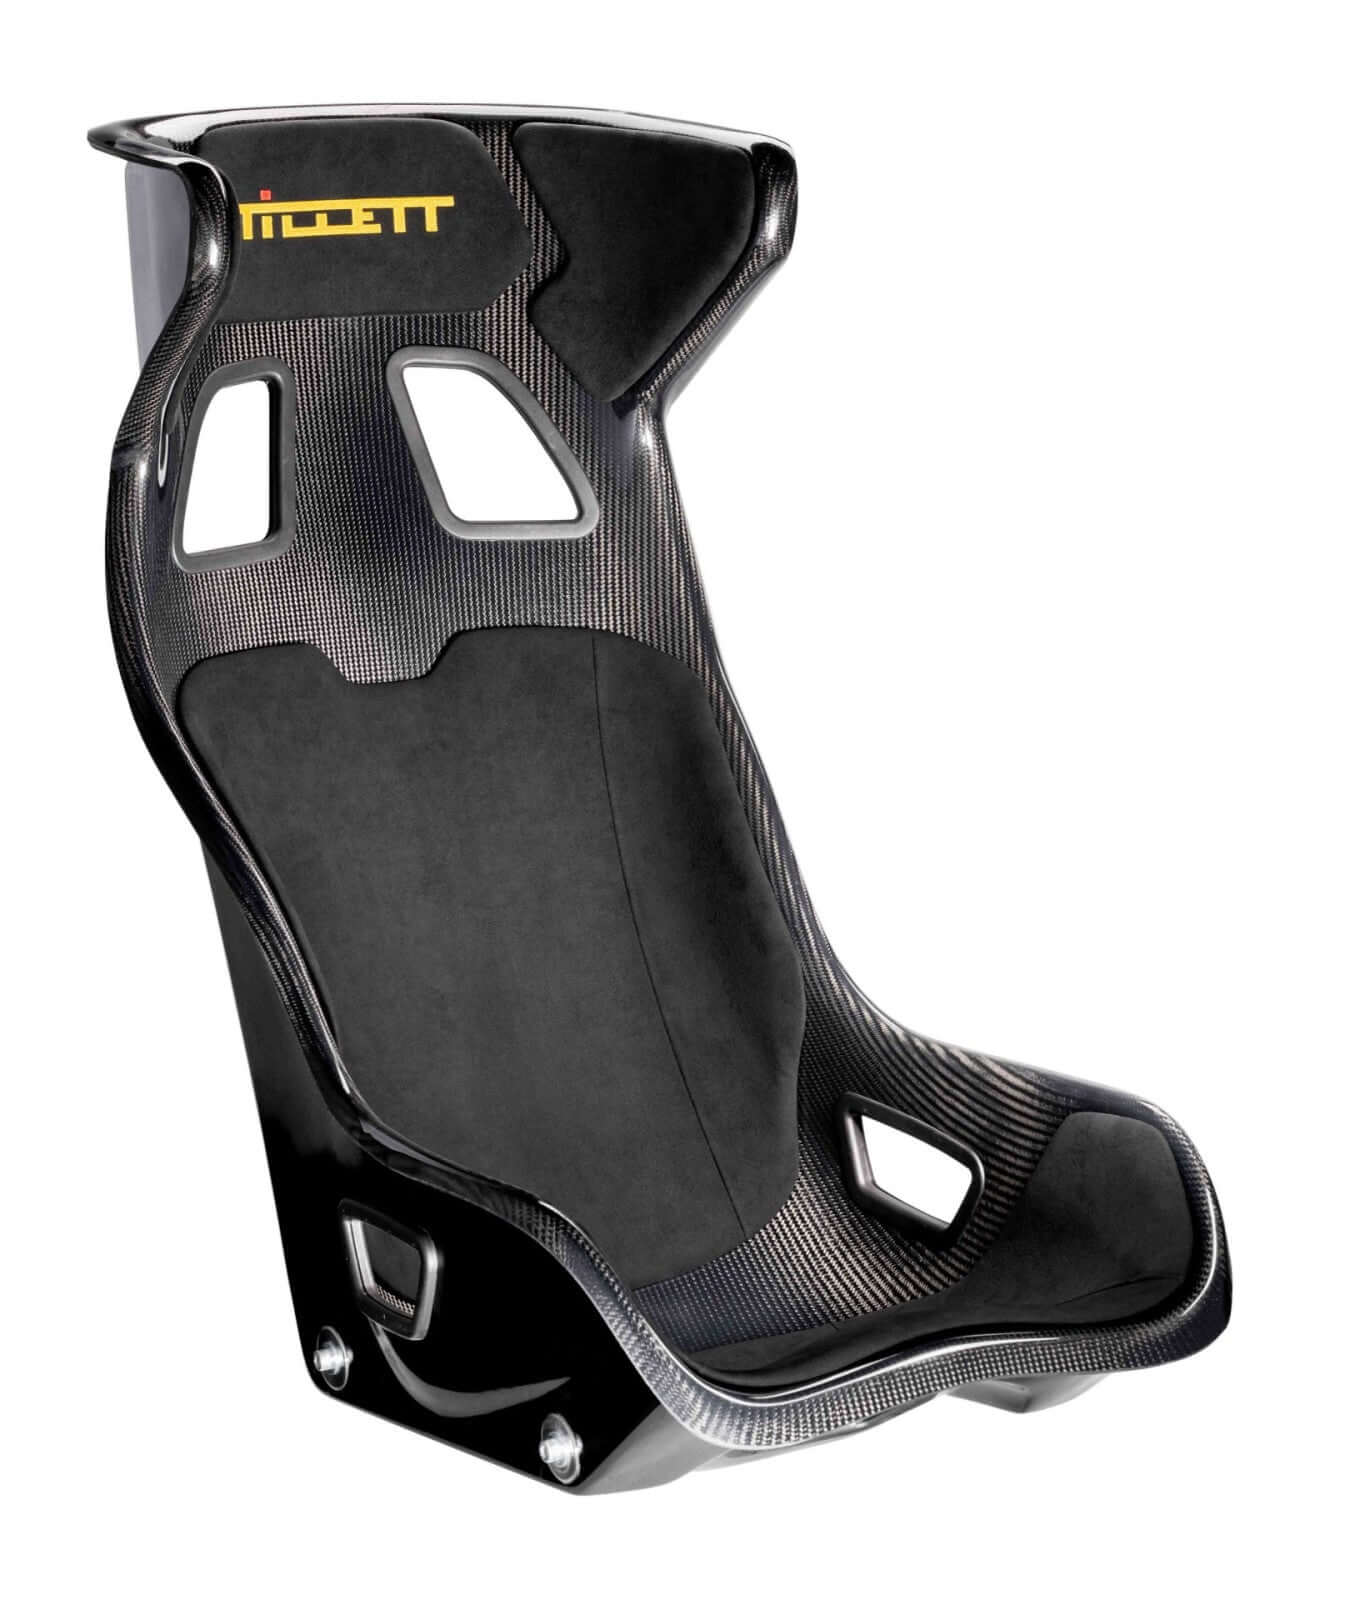 Tillett C1 XL Carbon GRP Race Car Seat - $2122.02